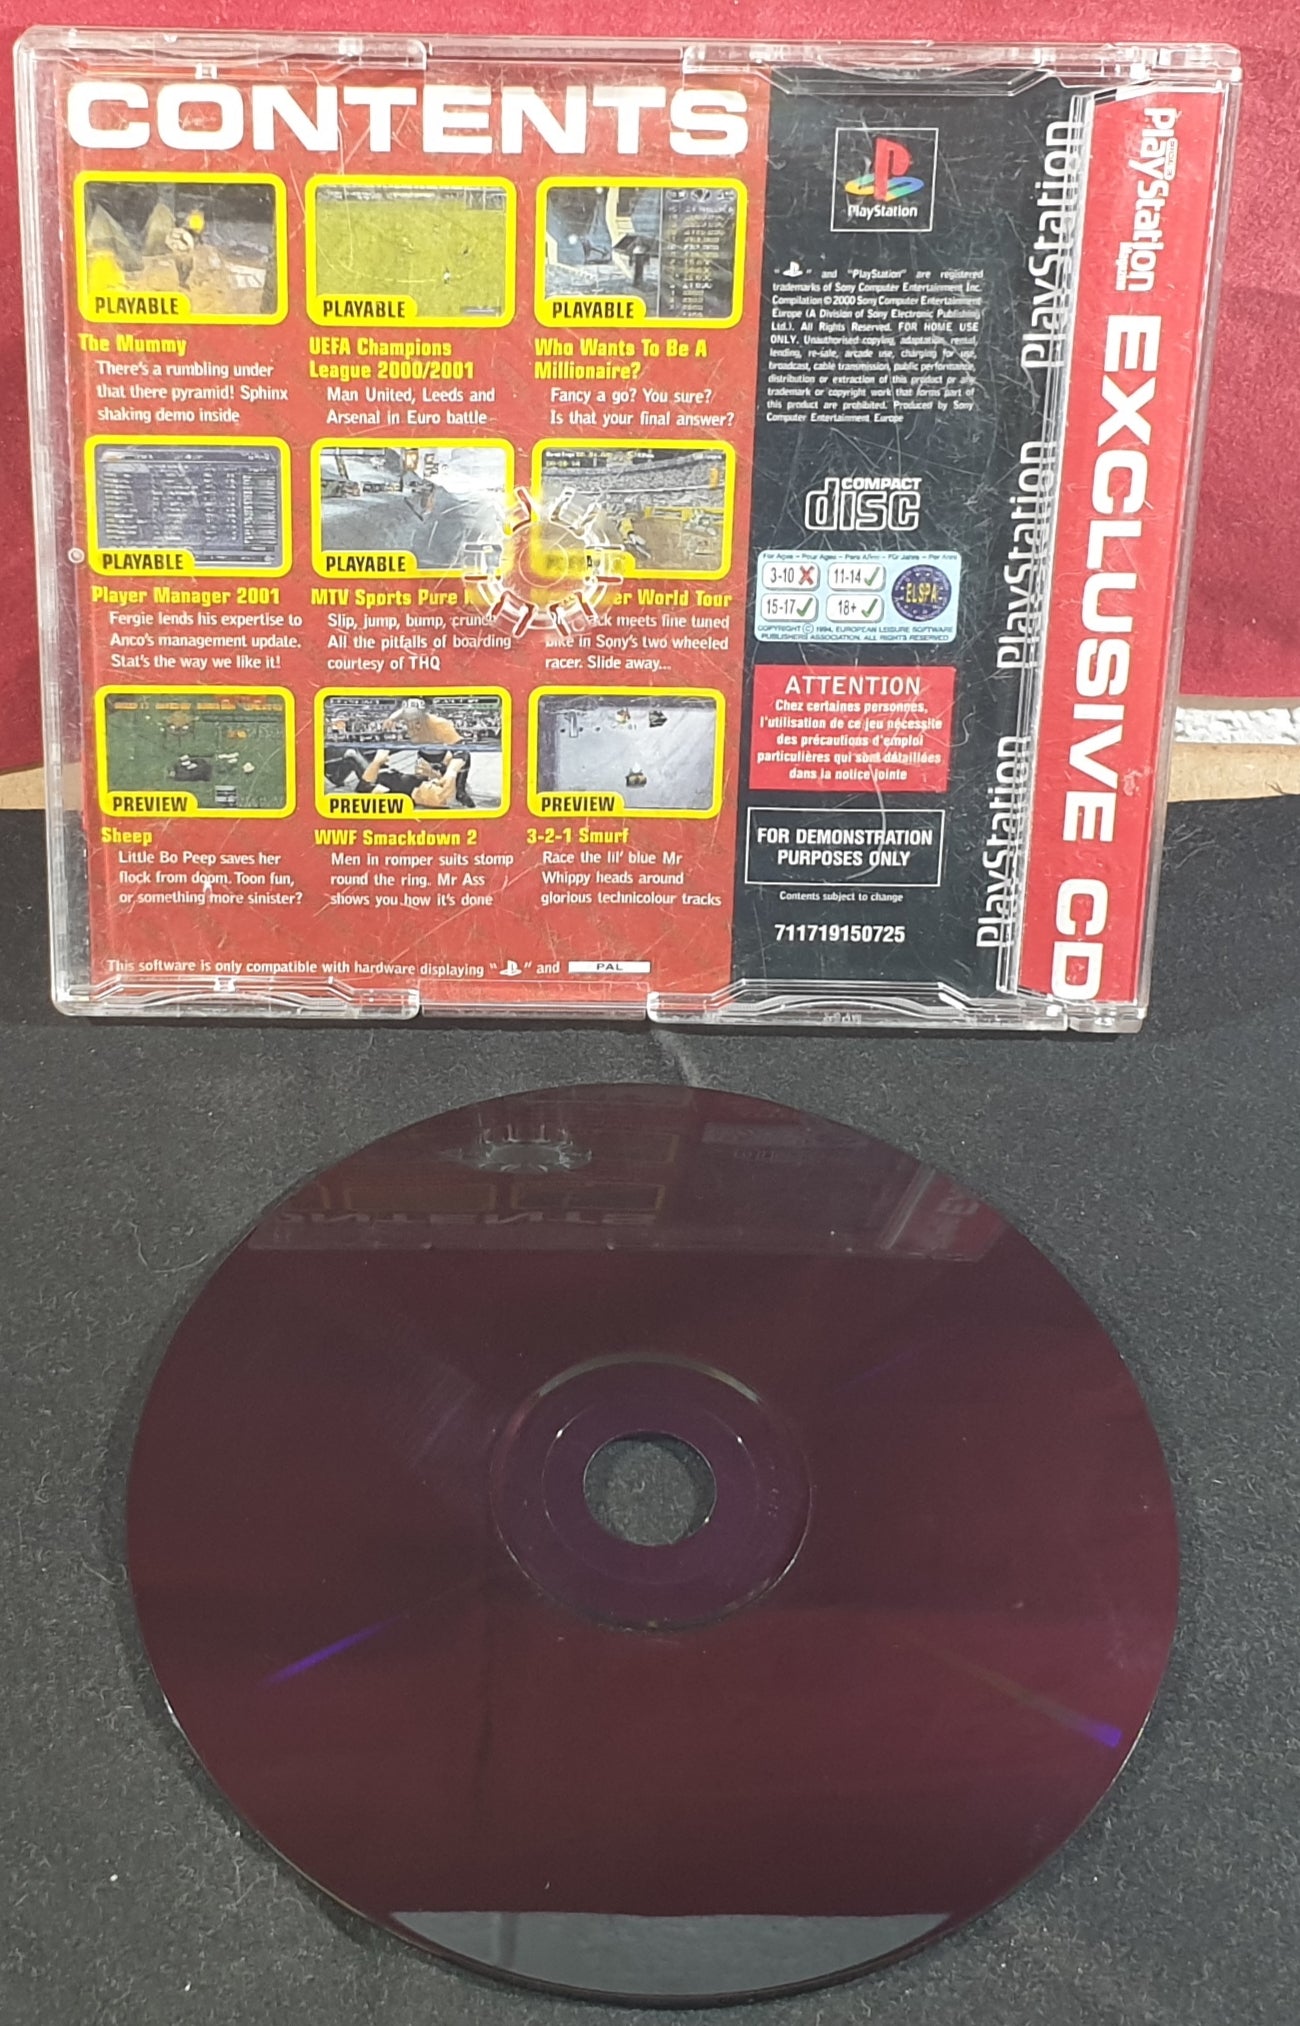 Sony Playstation 1 (PS1) Magazine Demo Disc 66